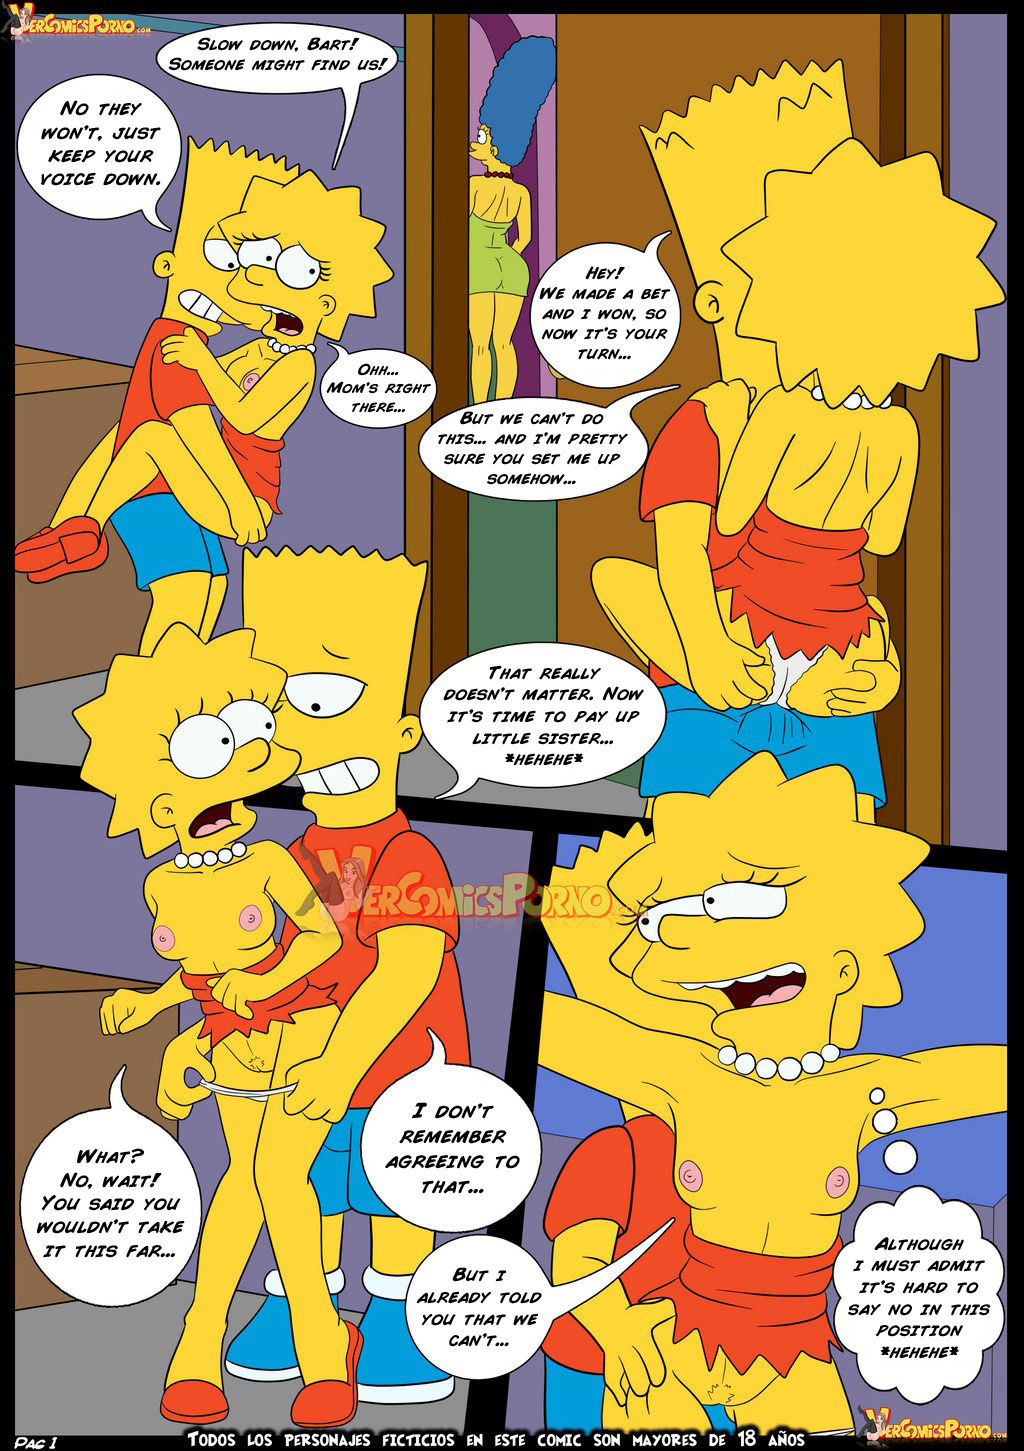 [CROC] The Simpsons / Futurama - Future purchase page 2